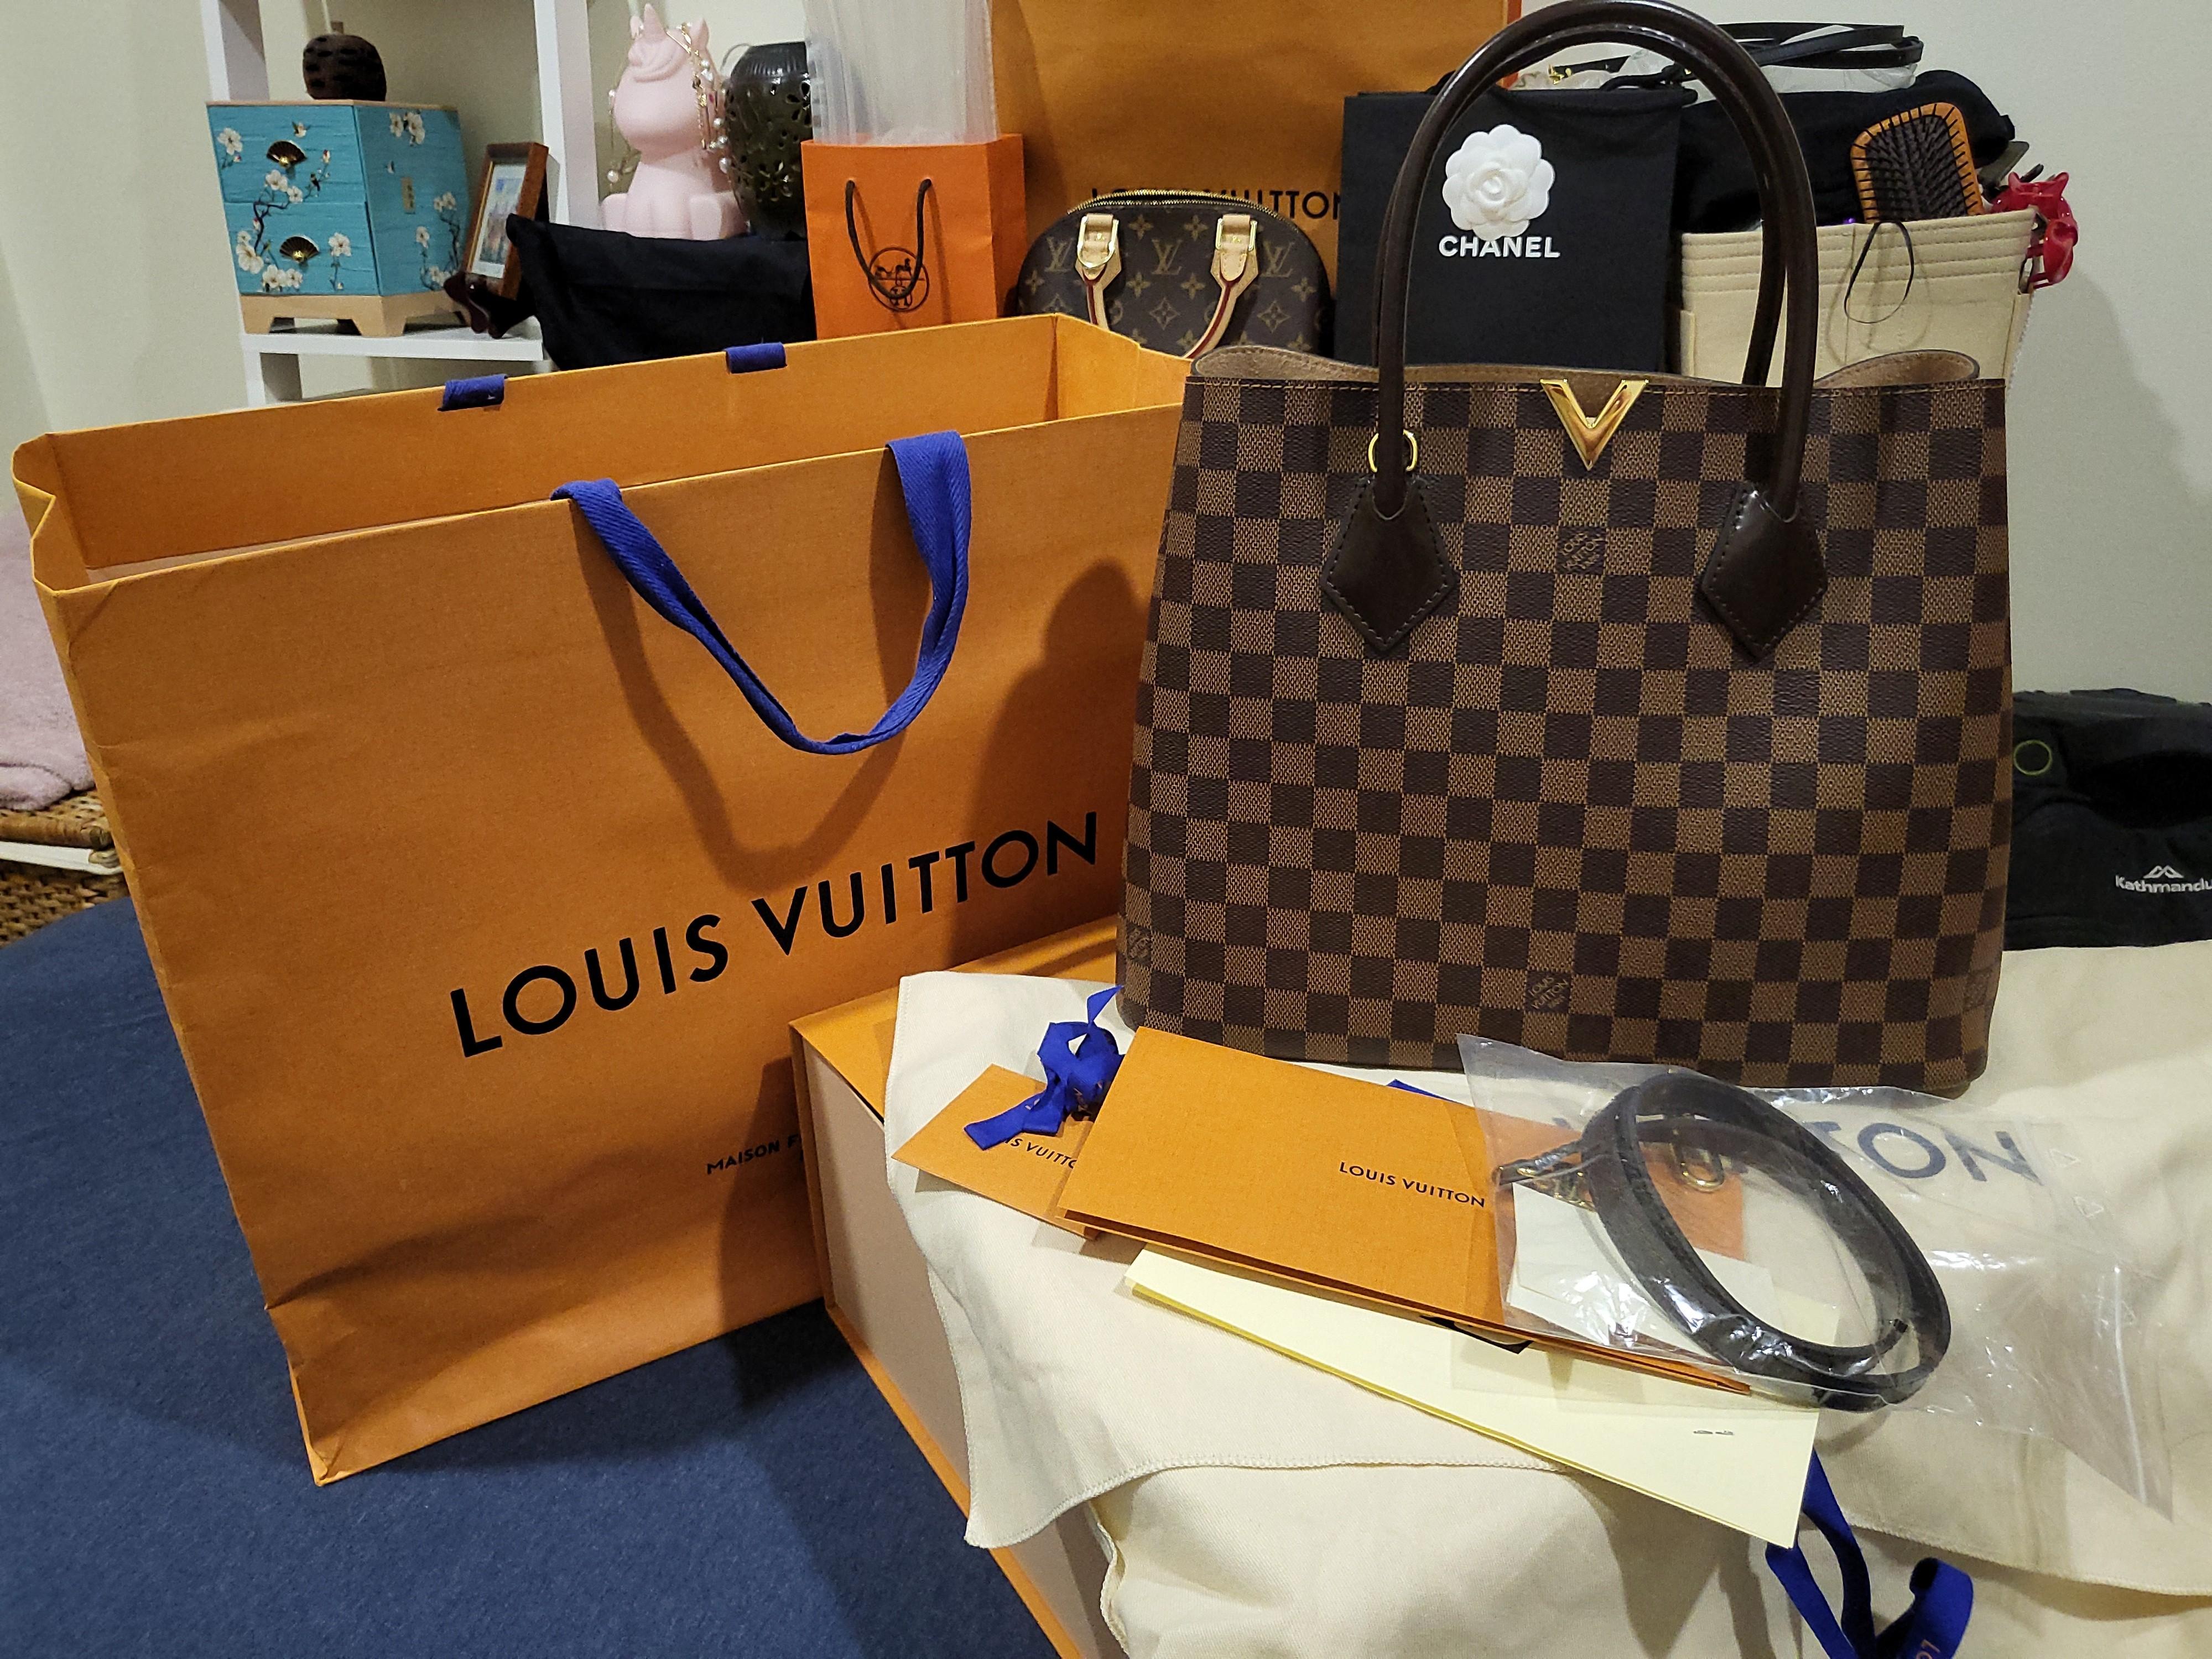 Louis Vuitton Kensington Damier Ebene Tote Bag